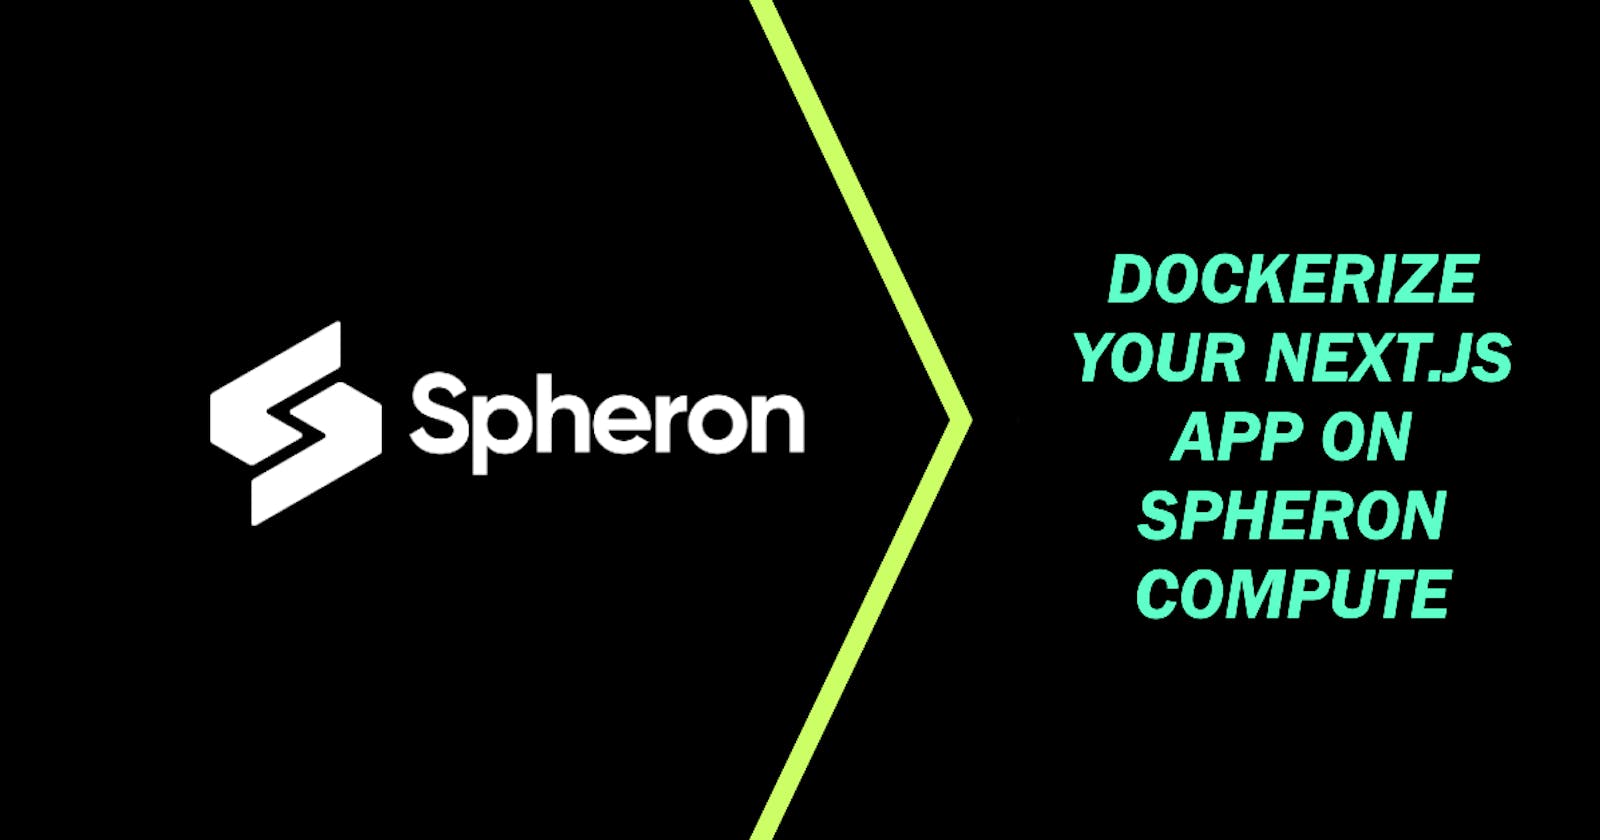 Dockerize Your Next.js Application on Spheron Compute